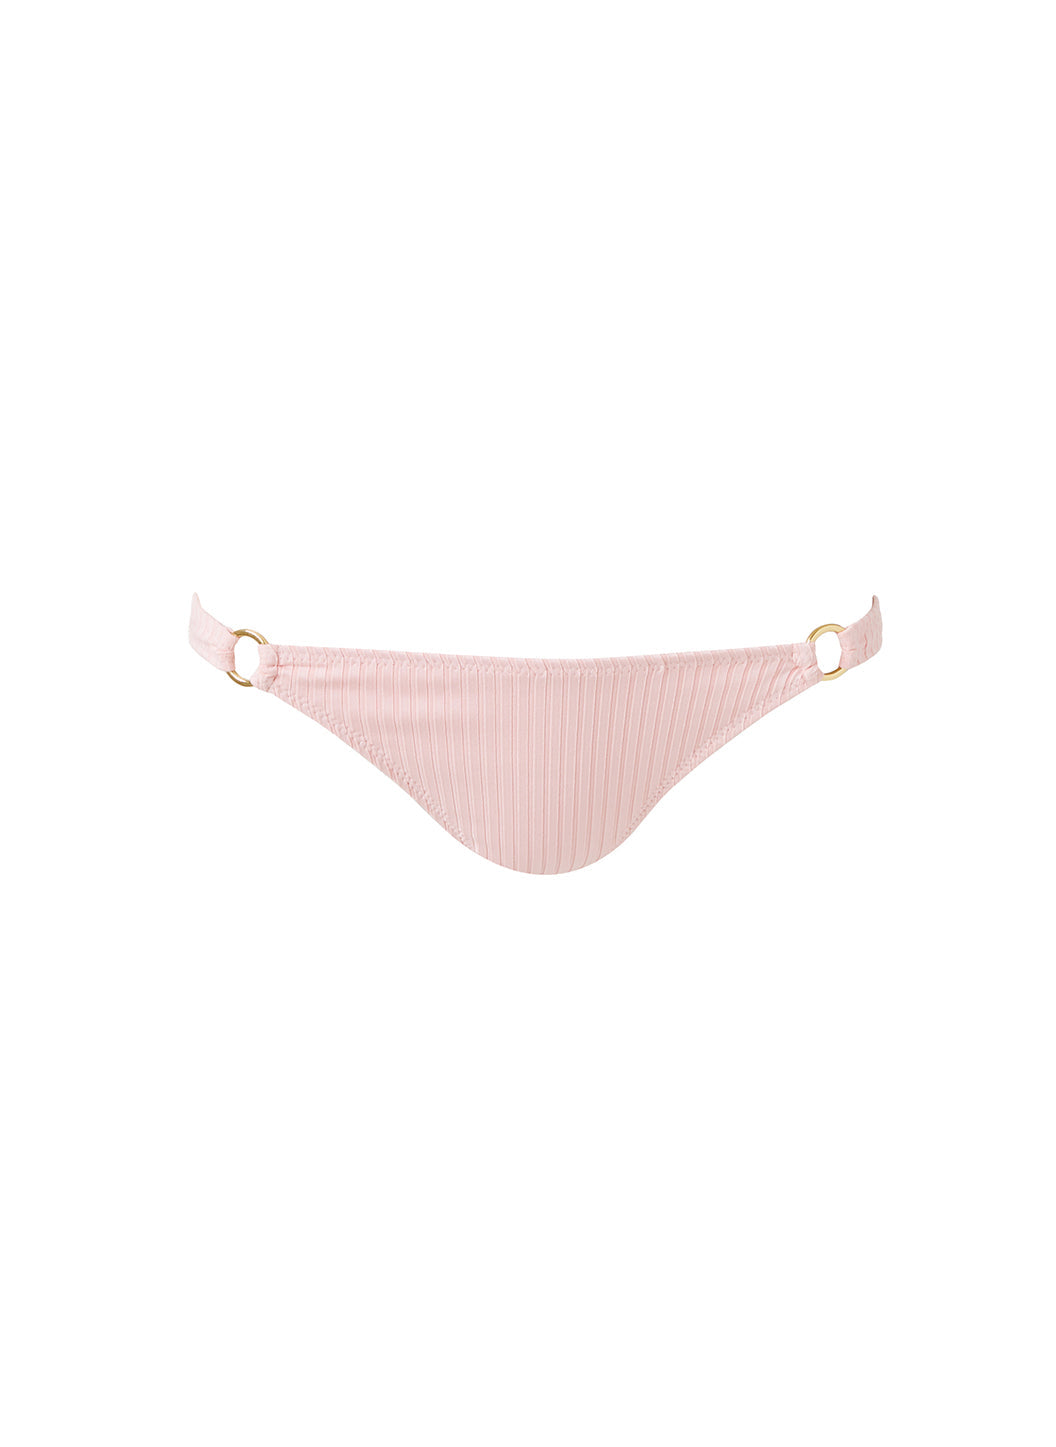 bari-rose-ribbed-bikini-bottom_cutout